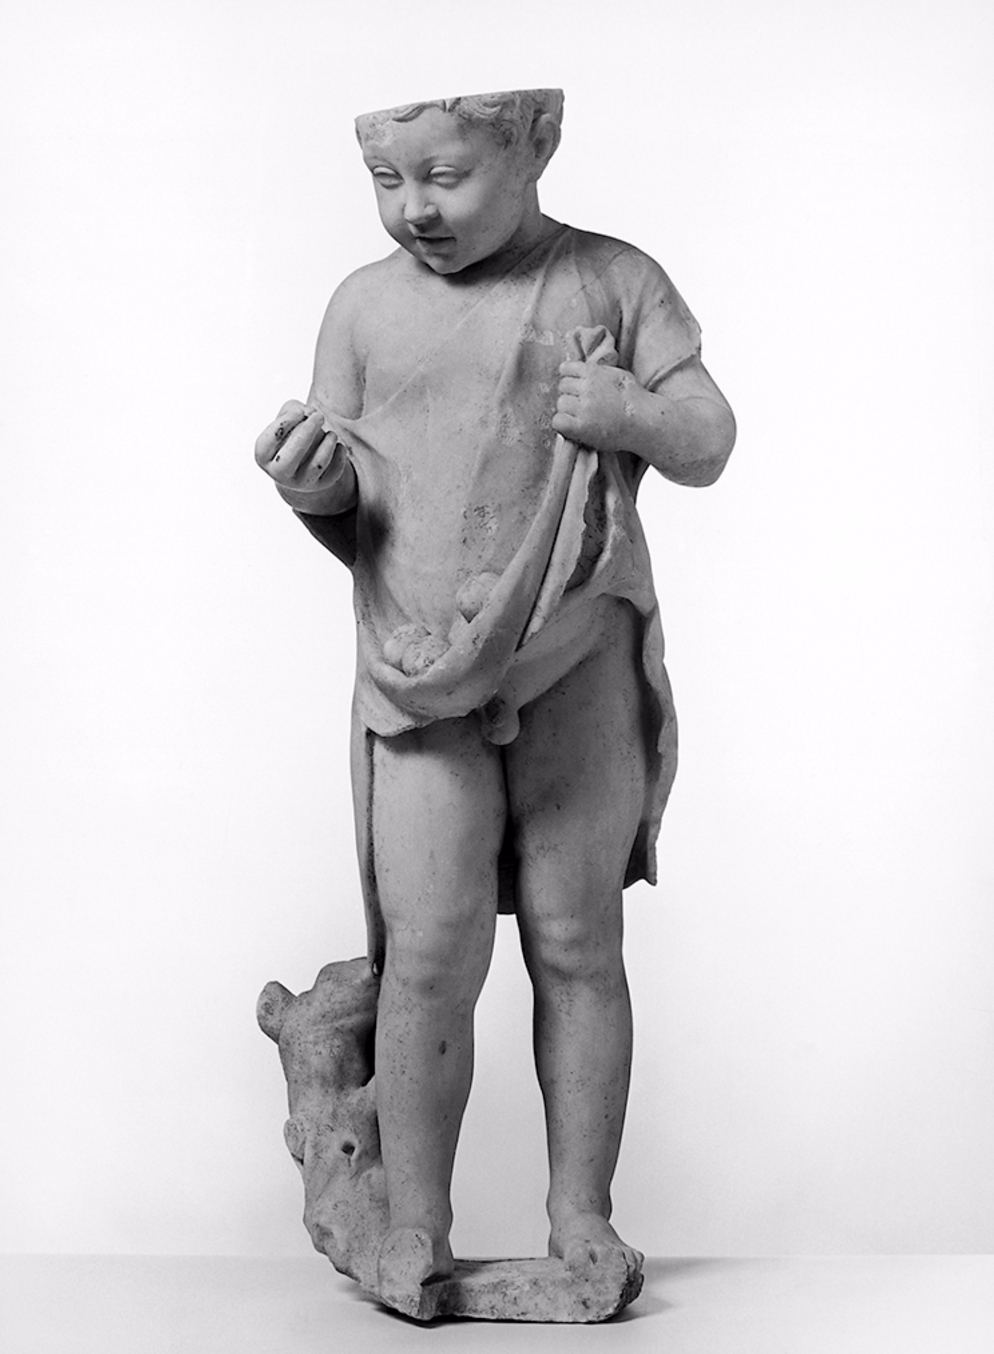 Boy with Pomegranates, Ny Carlsberg Glyptotek, I.N. 507, in Mette Moltesen, Imperial Rome: Catalogue, vol. 3 (untitled) Ny Carlsberg Glyptotek, 2005